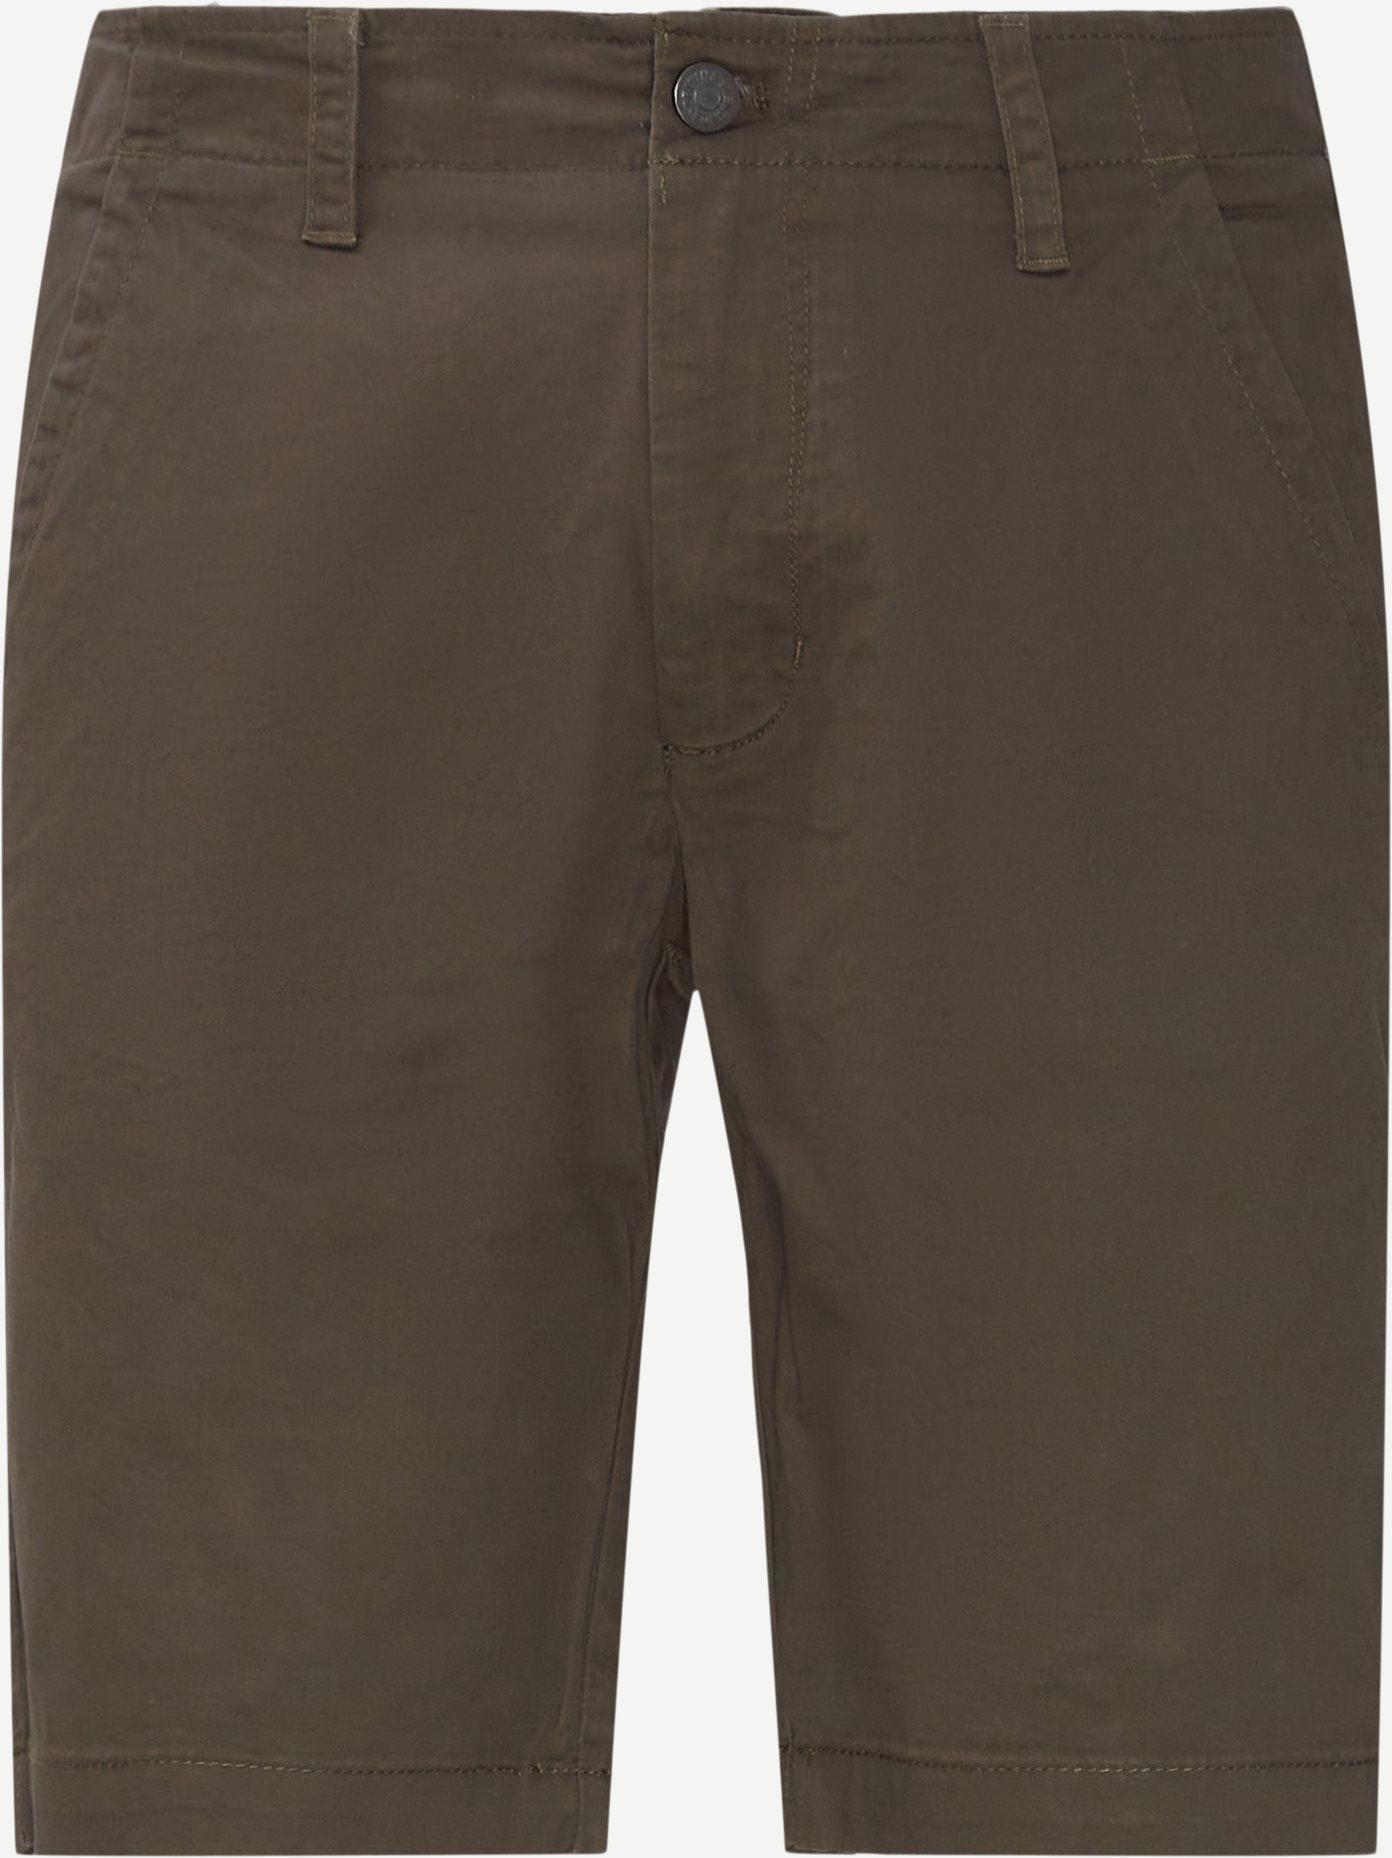 Scherbatsky Shorts - Shorts - Regular fit - Army